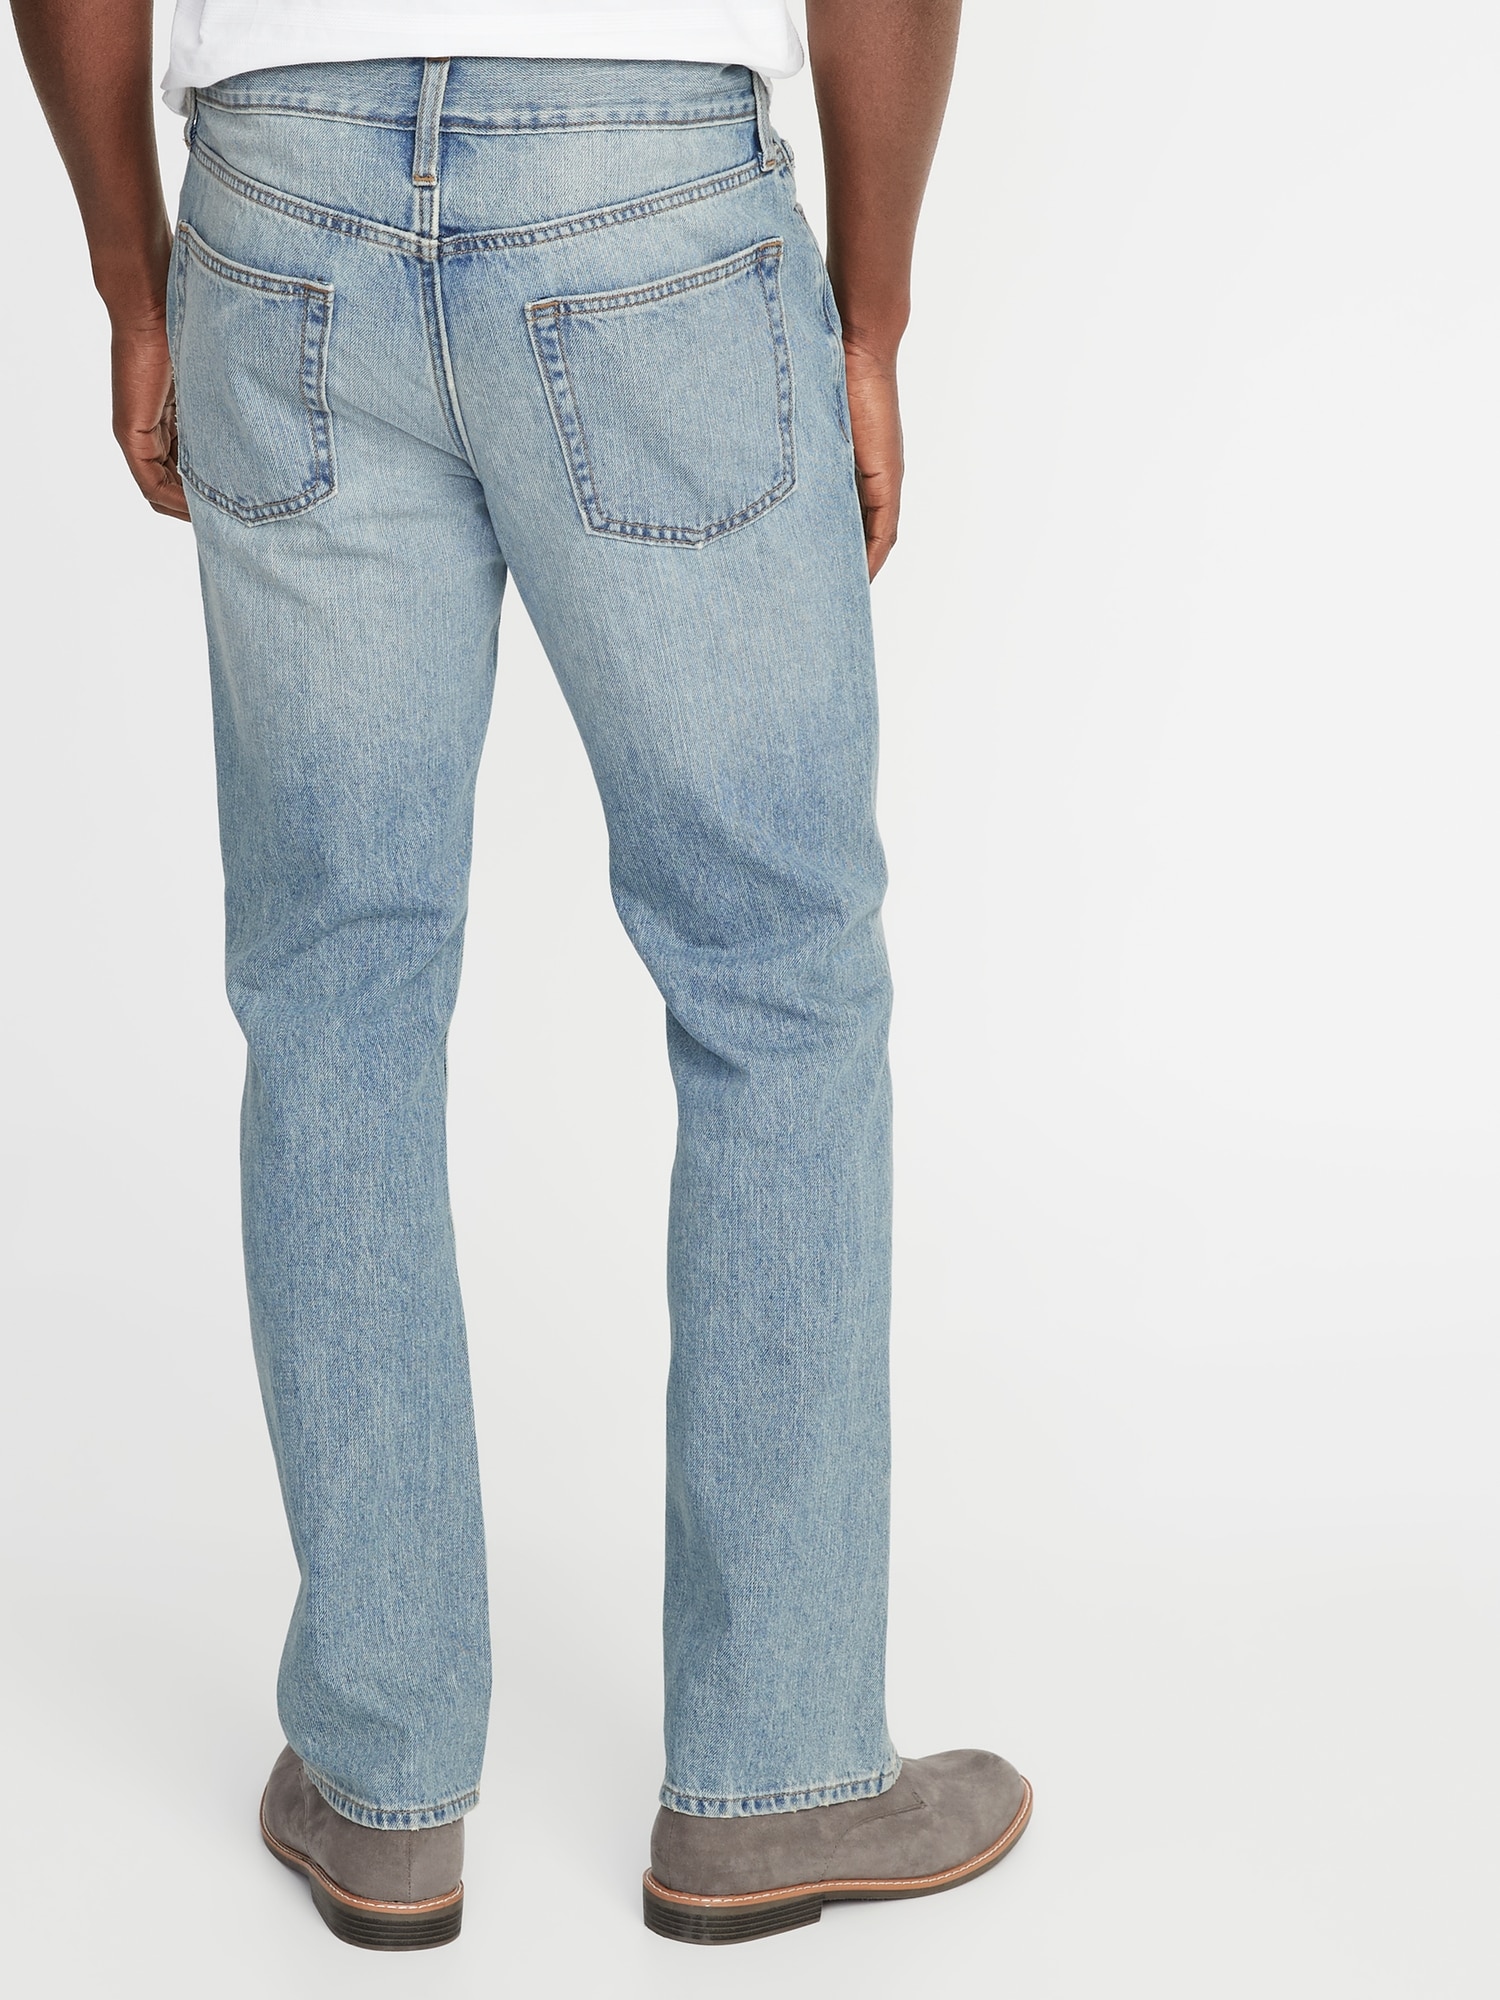 old navy slim fit jeans mens